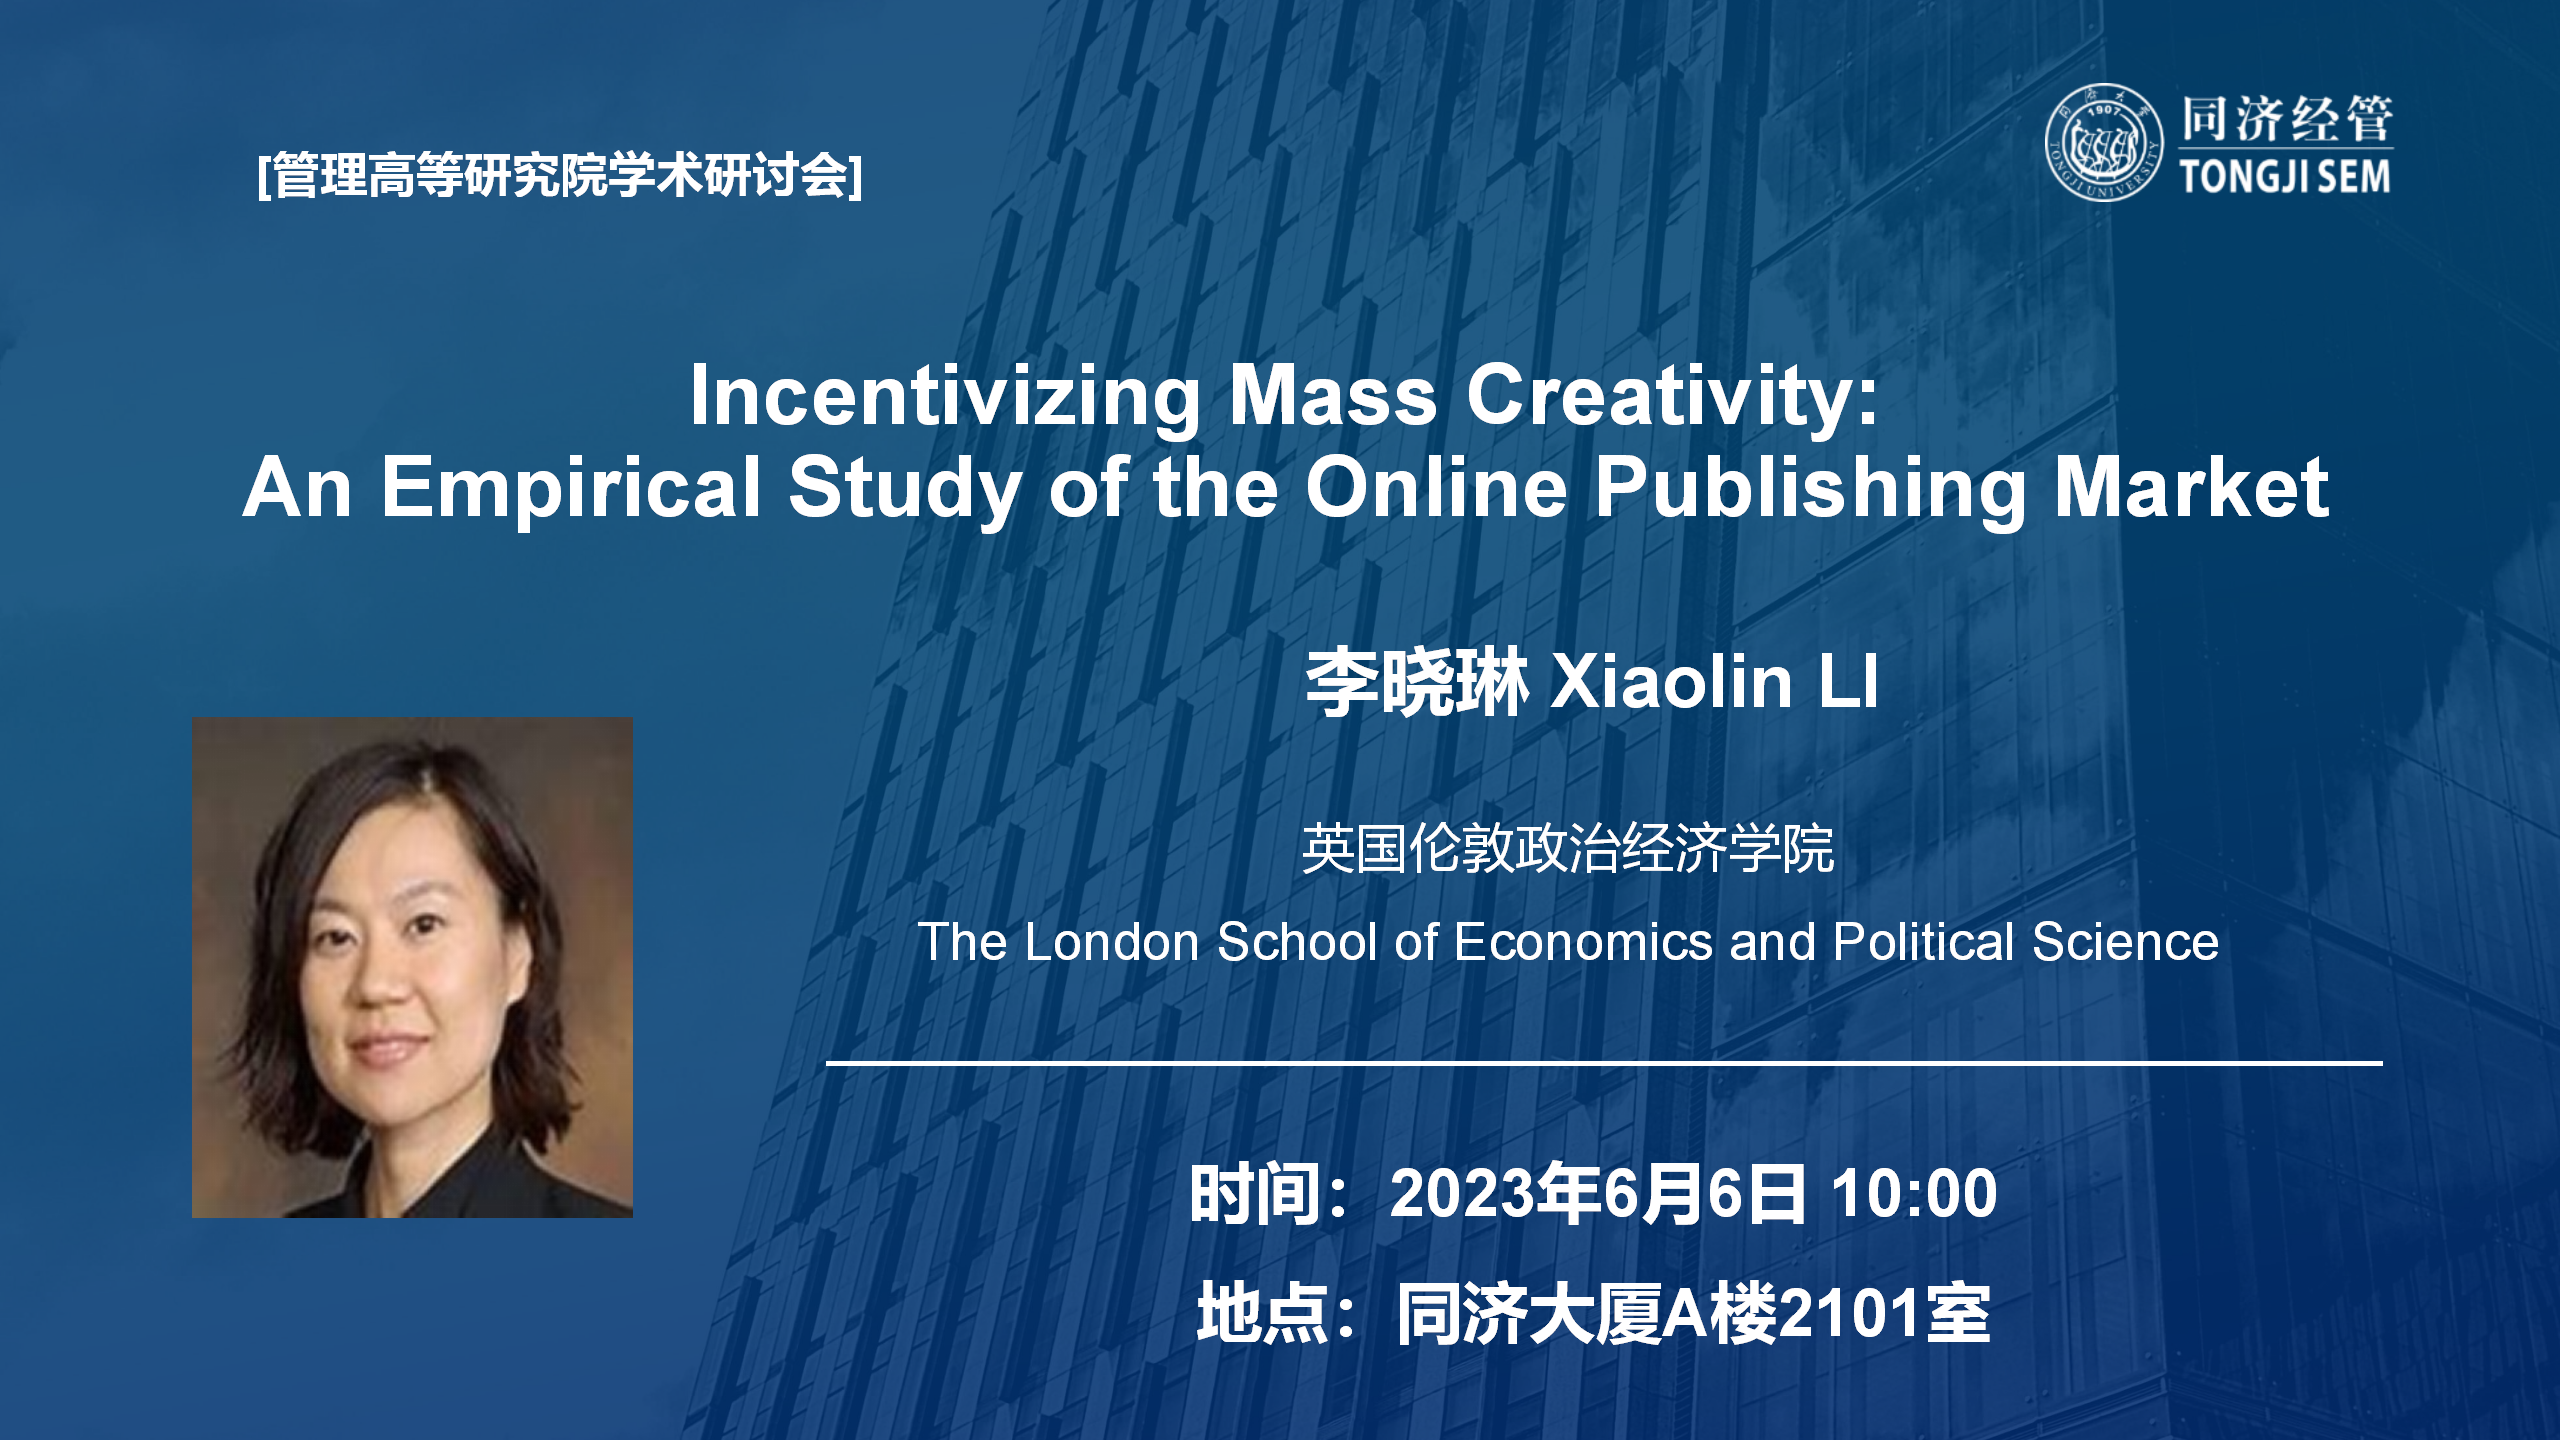 Incentivizing Mass Creativity: An Empirical Study of the Online Publishing Market